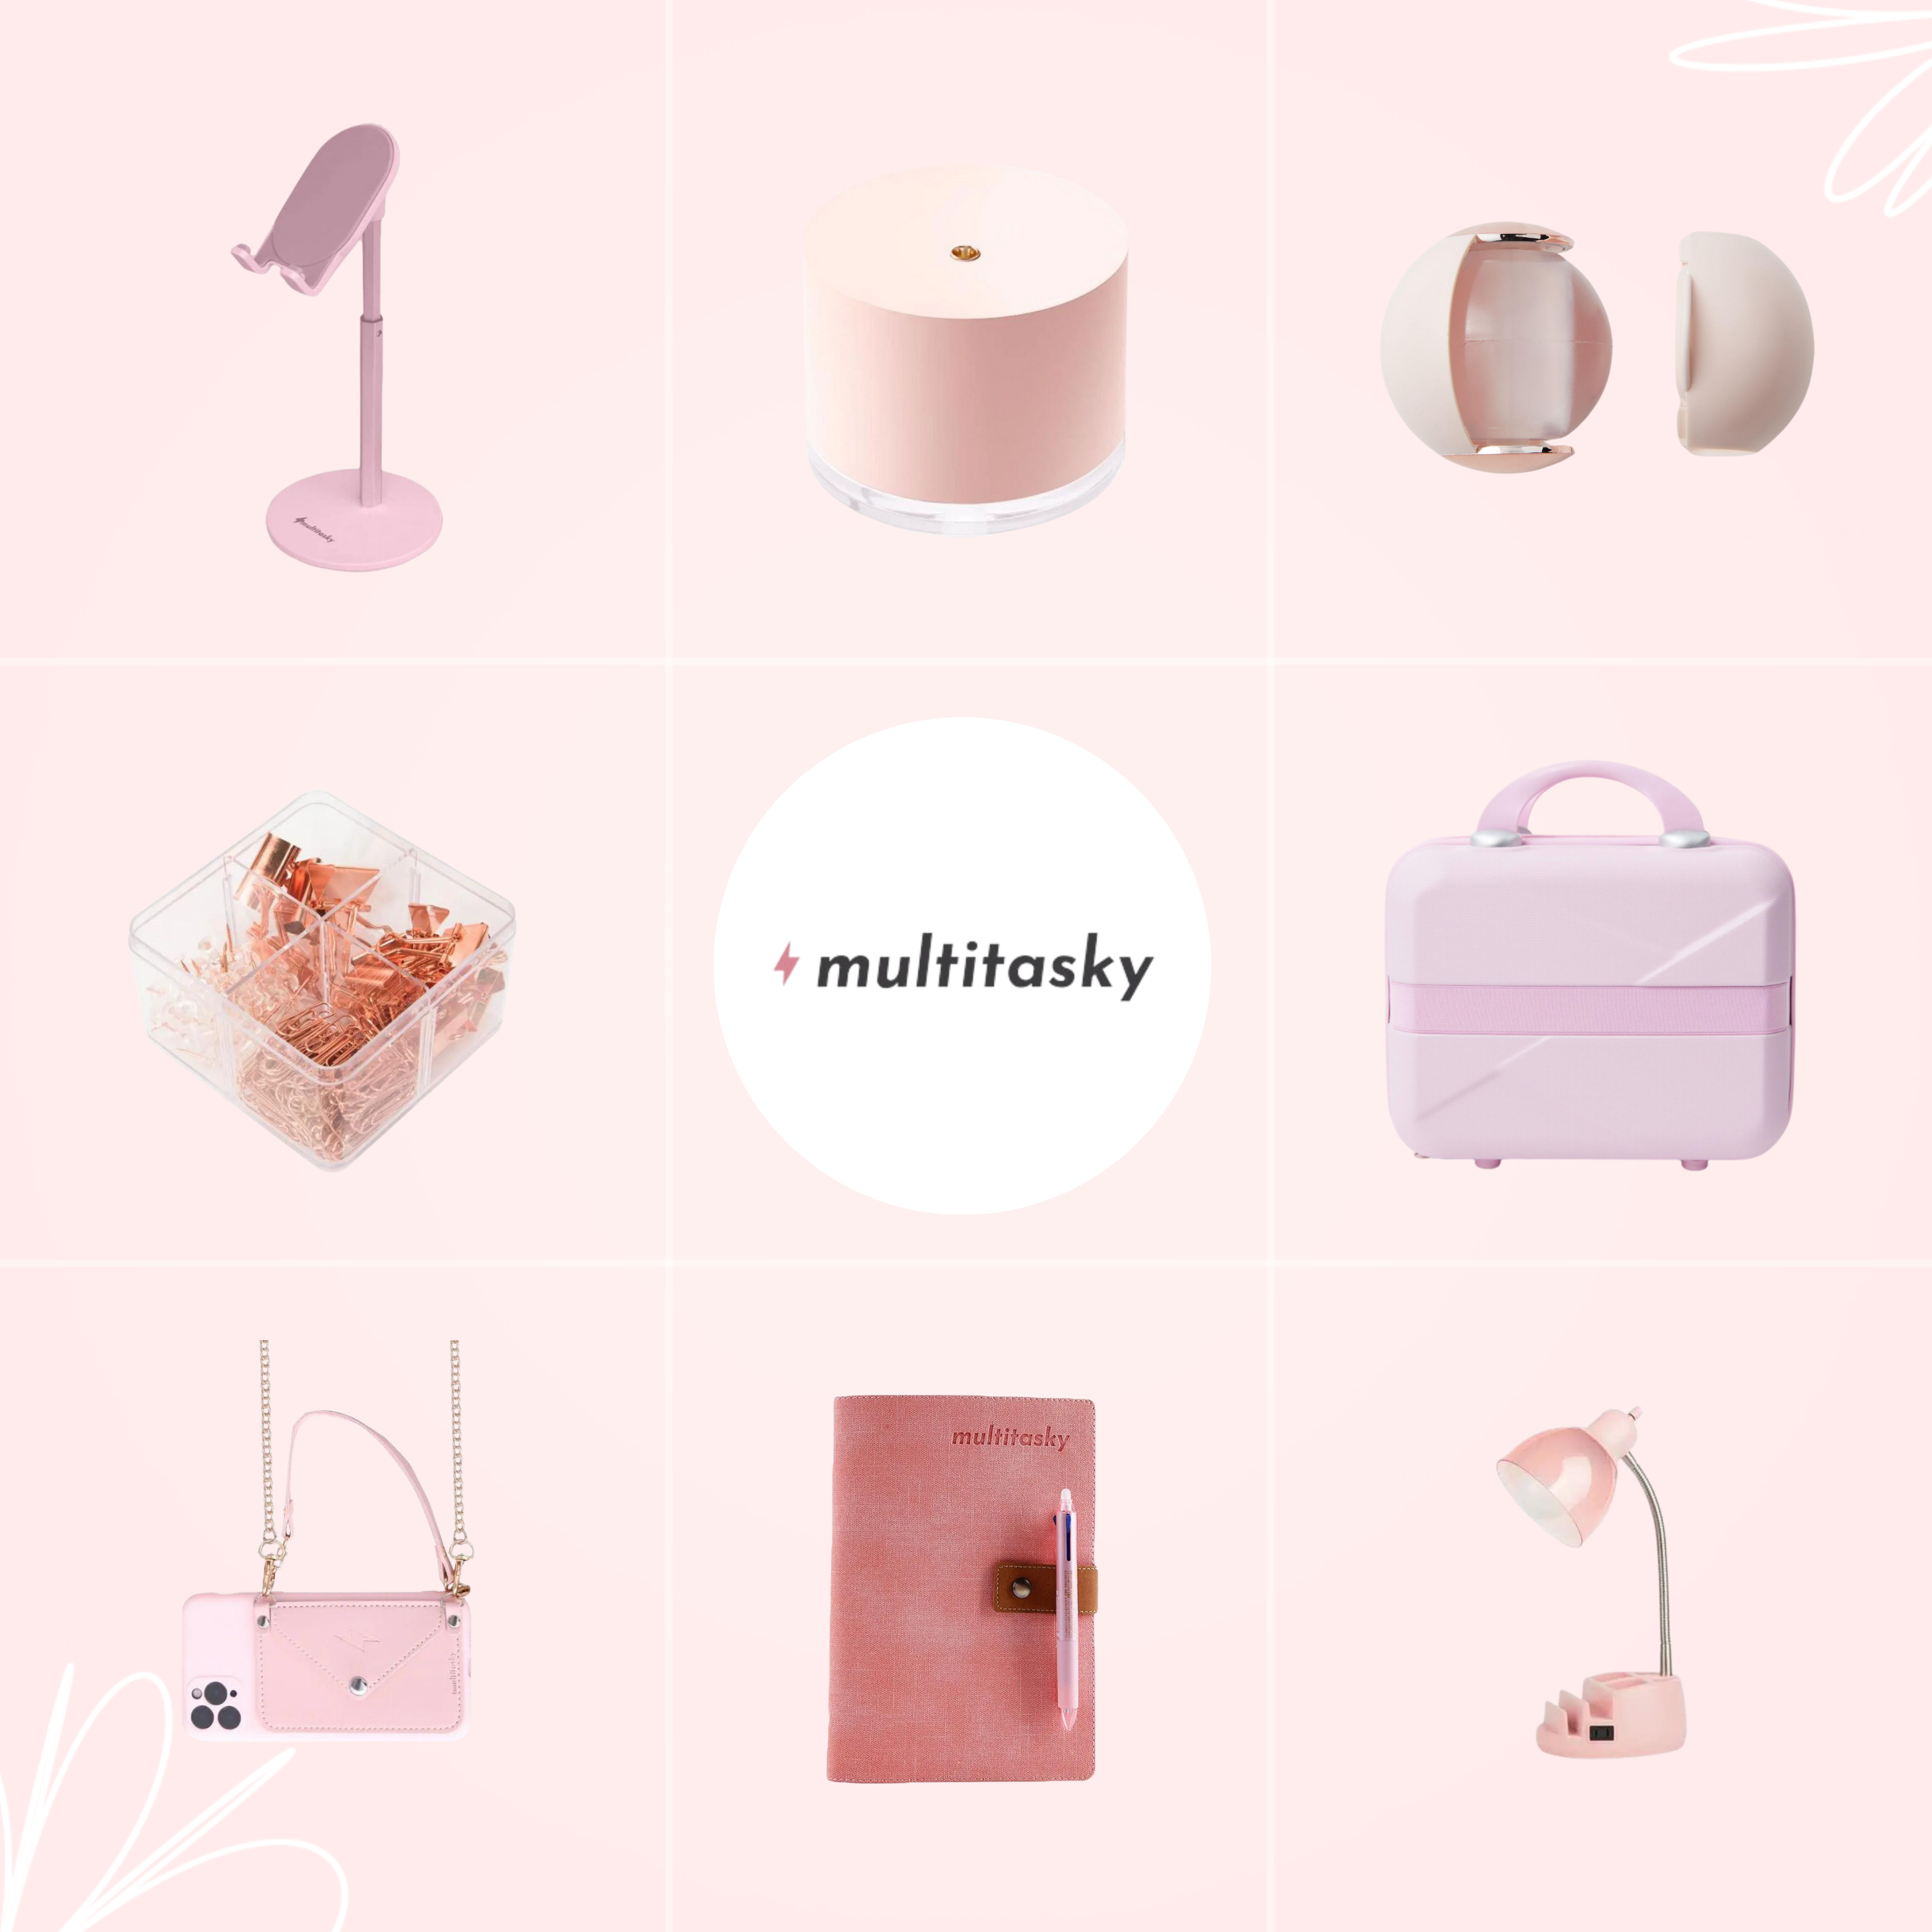 Brand image for Multitasky